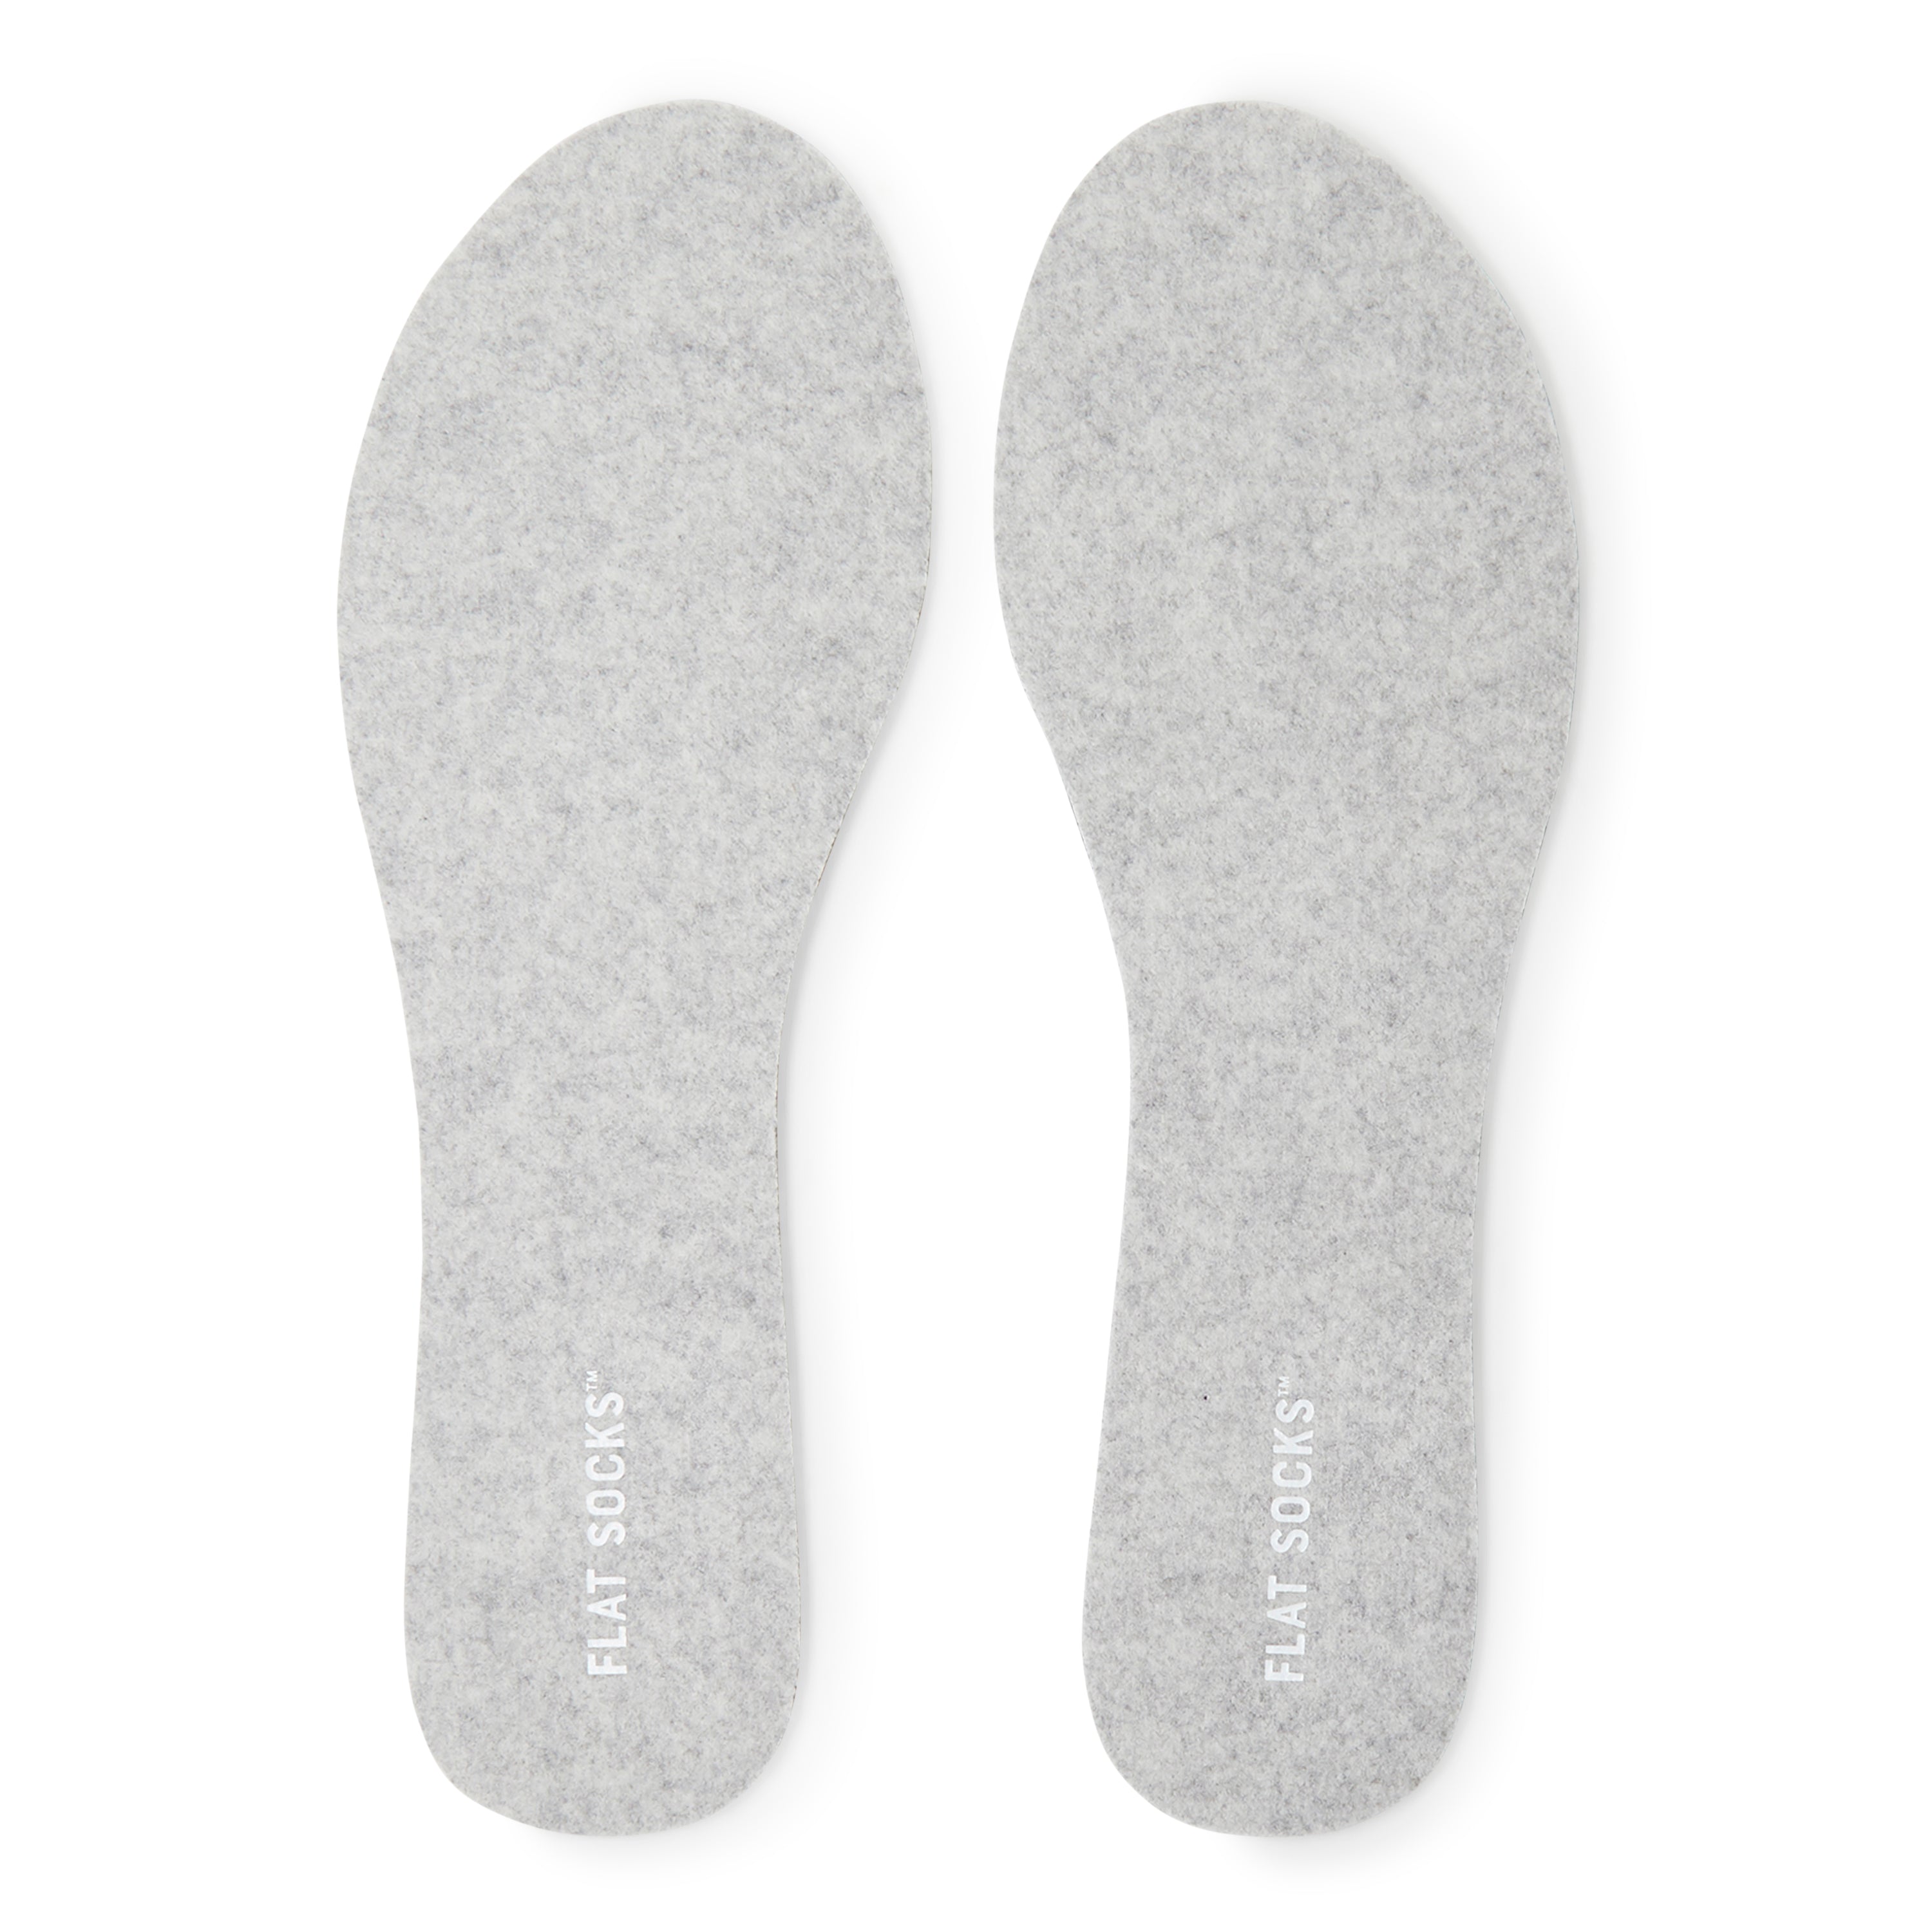 Buy lt-heather-grey Flat Socks